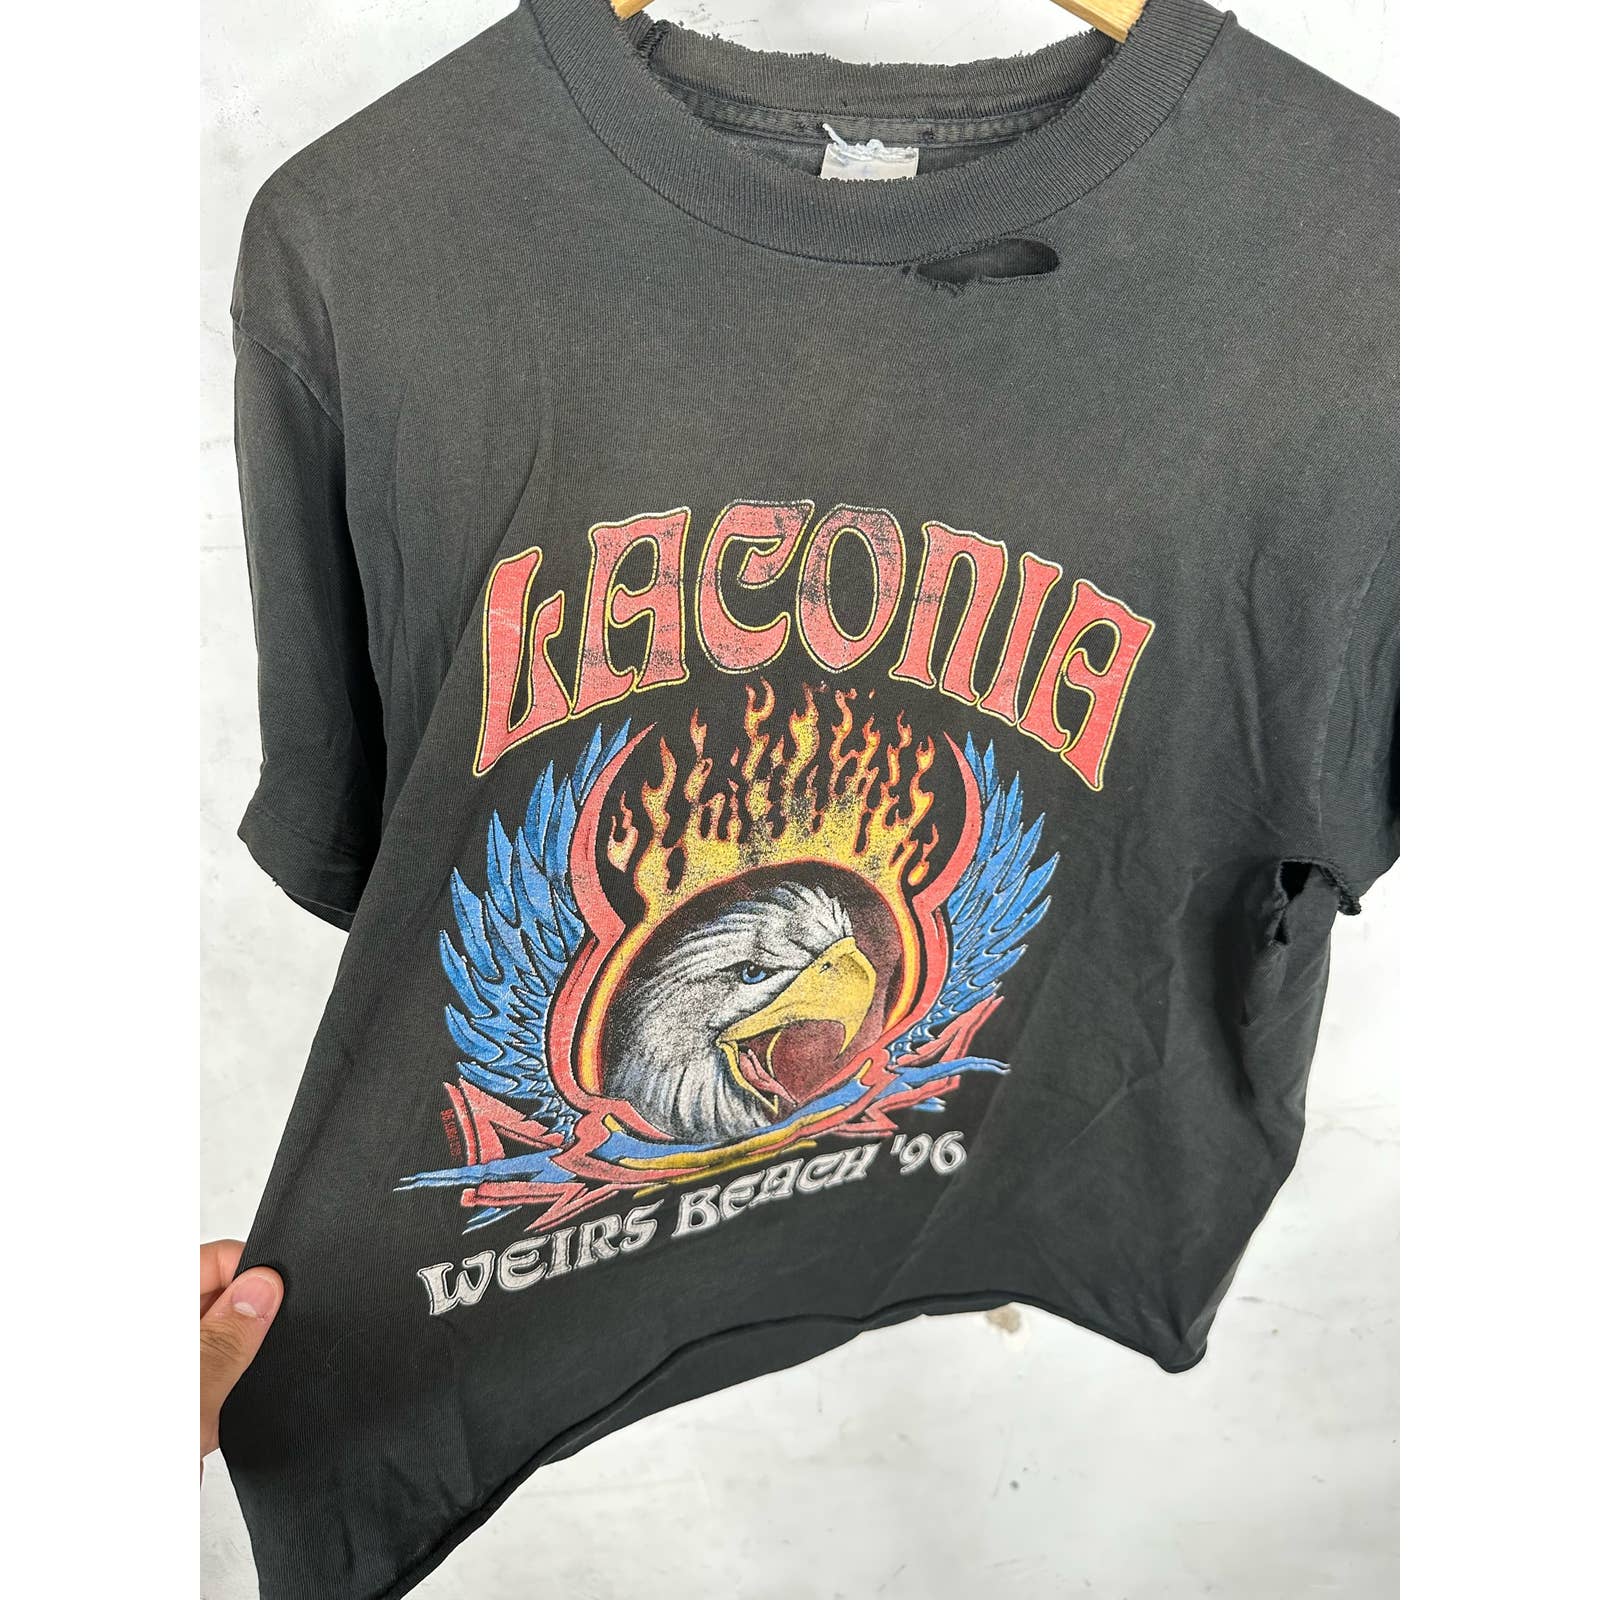 Vintage Laconia Bike Tour T-Shirt